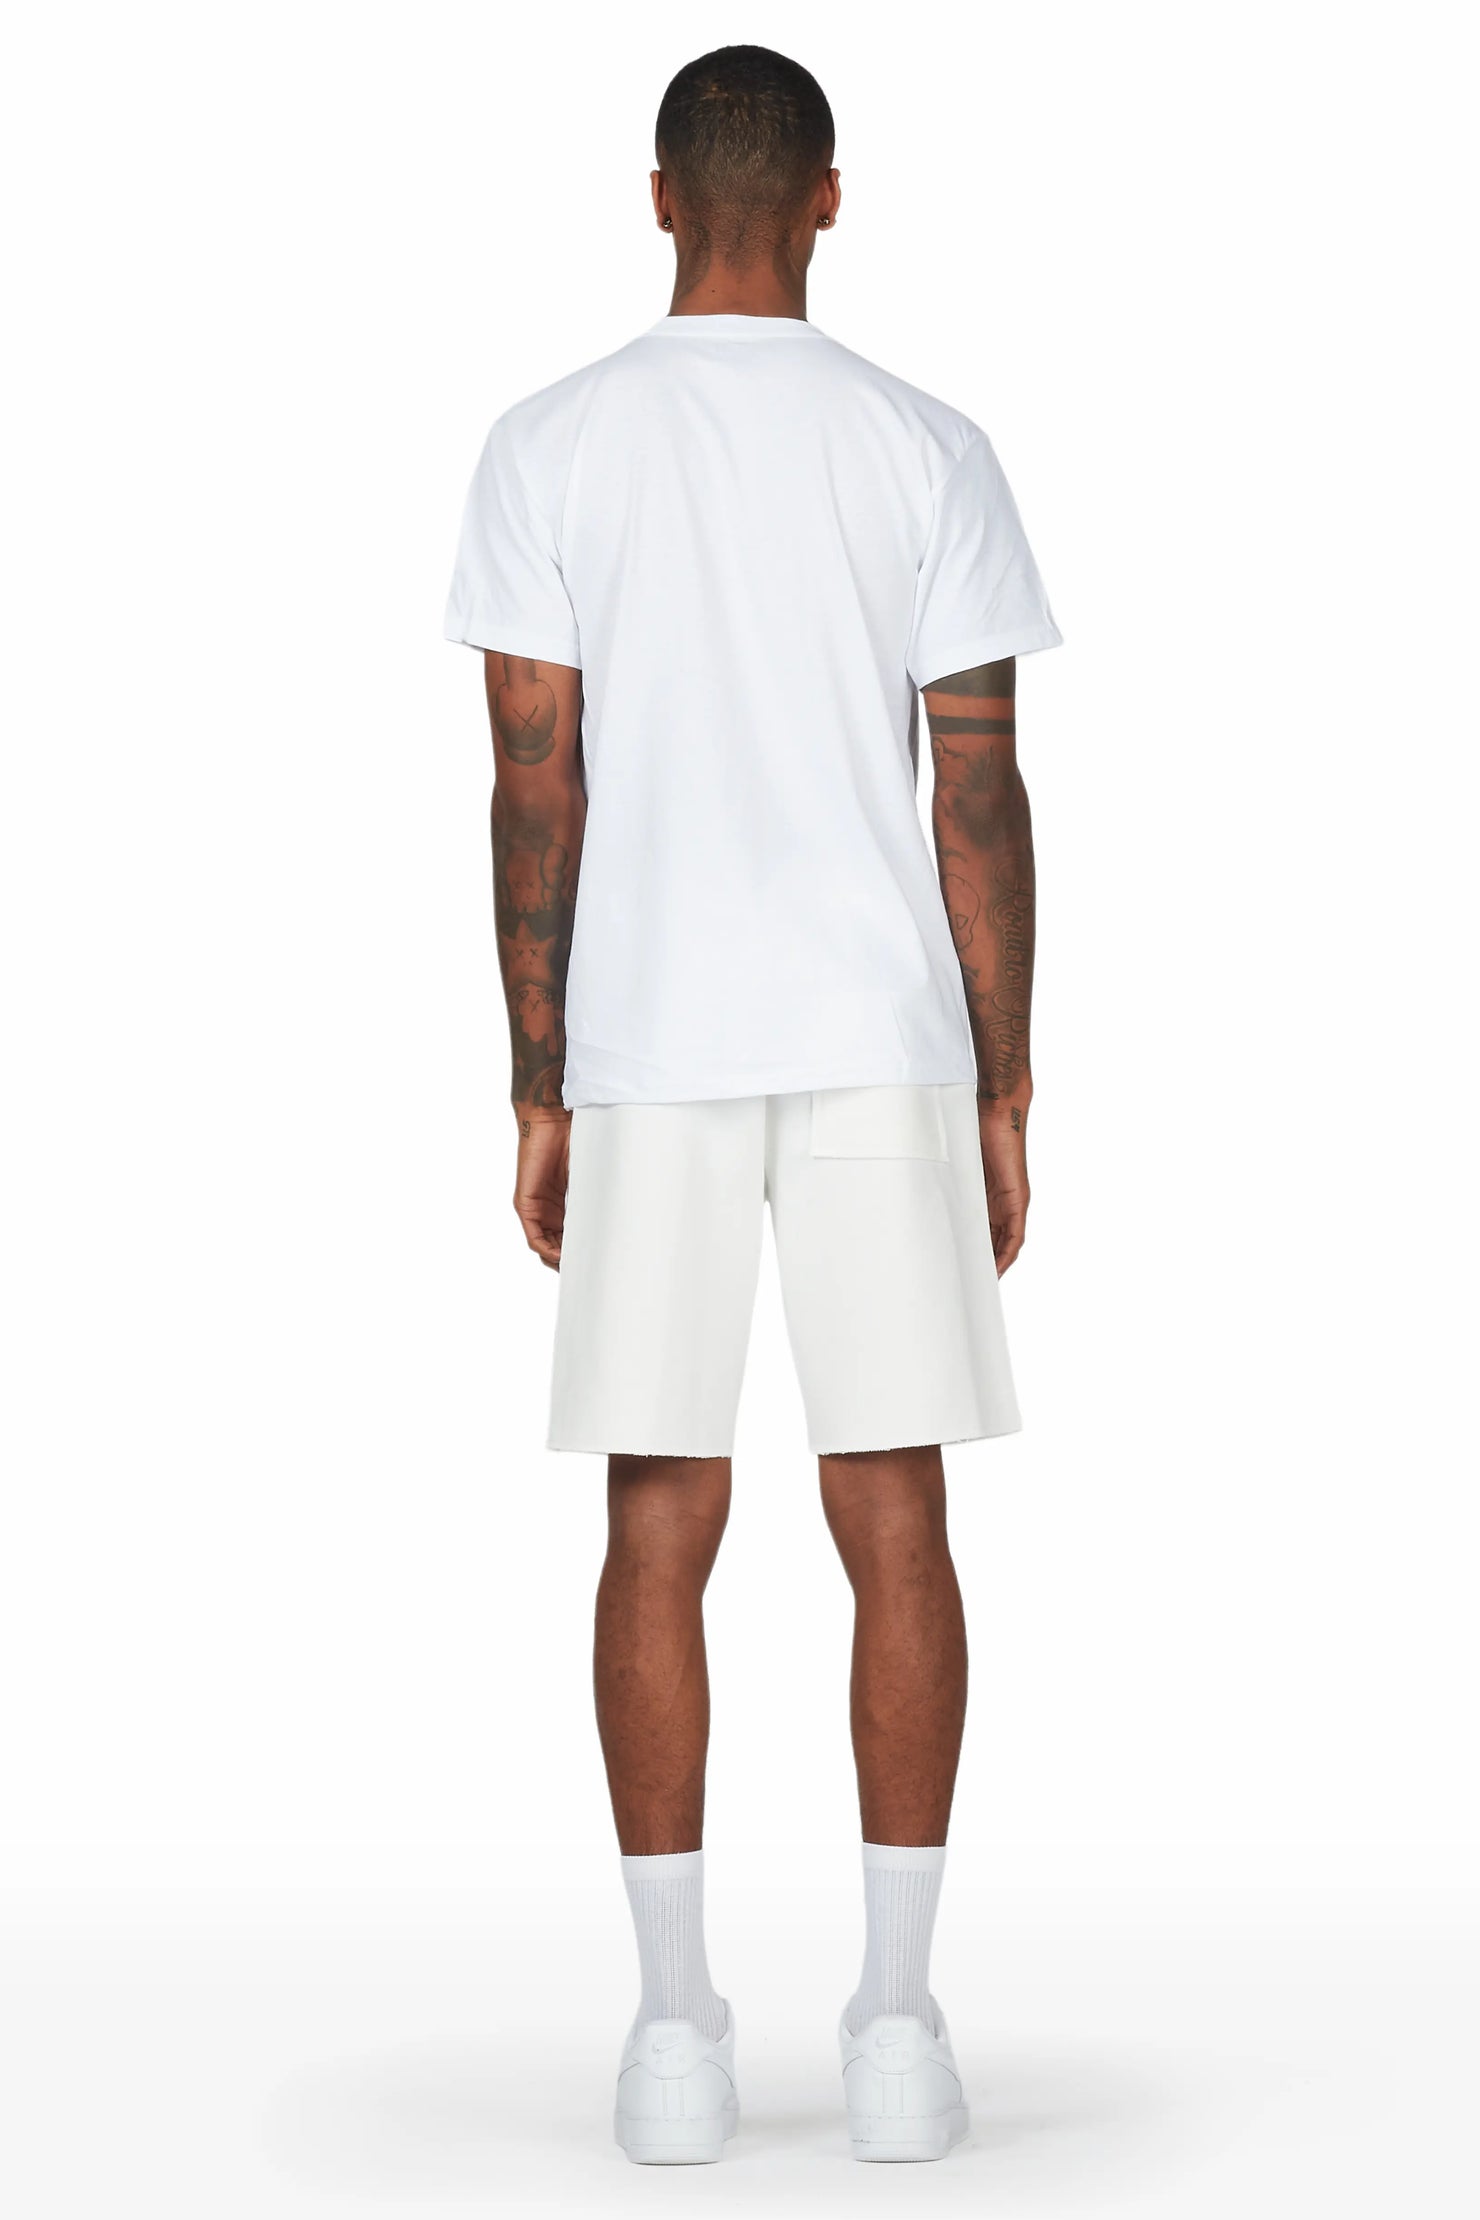 Fume White T-Shirt Short Set